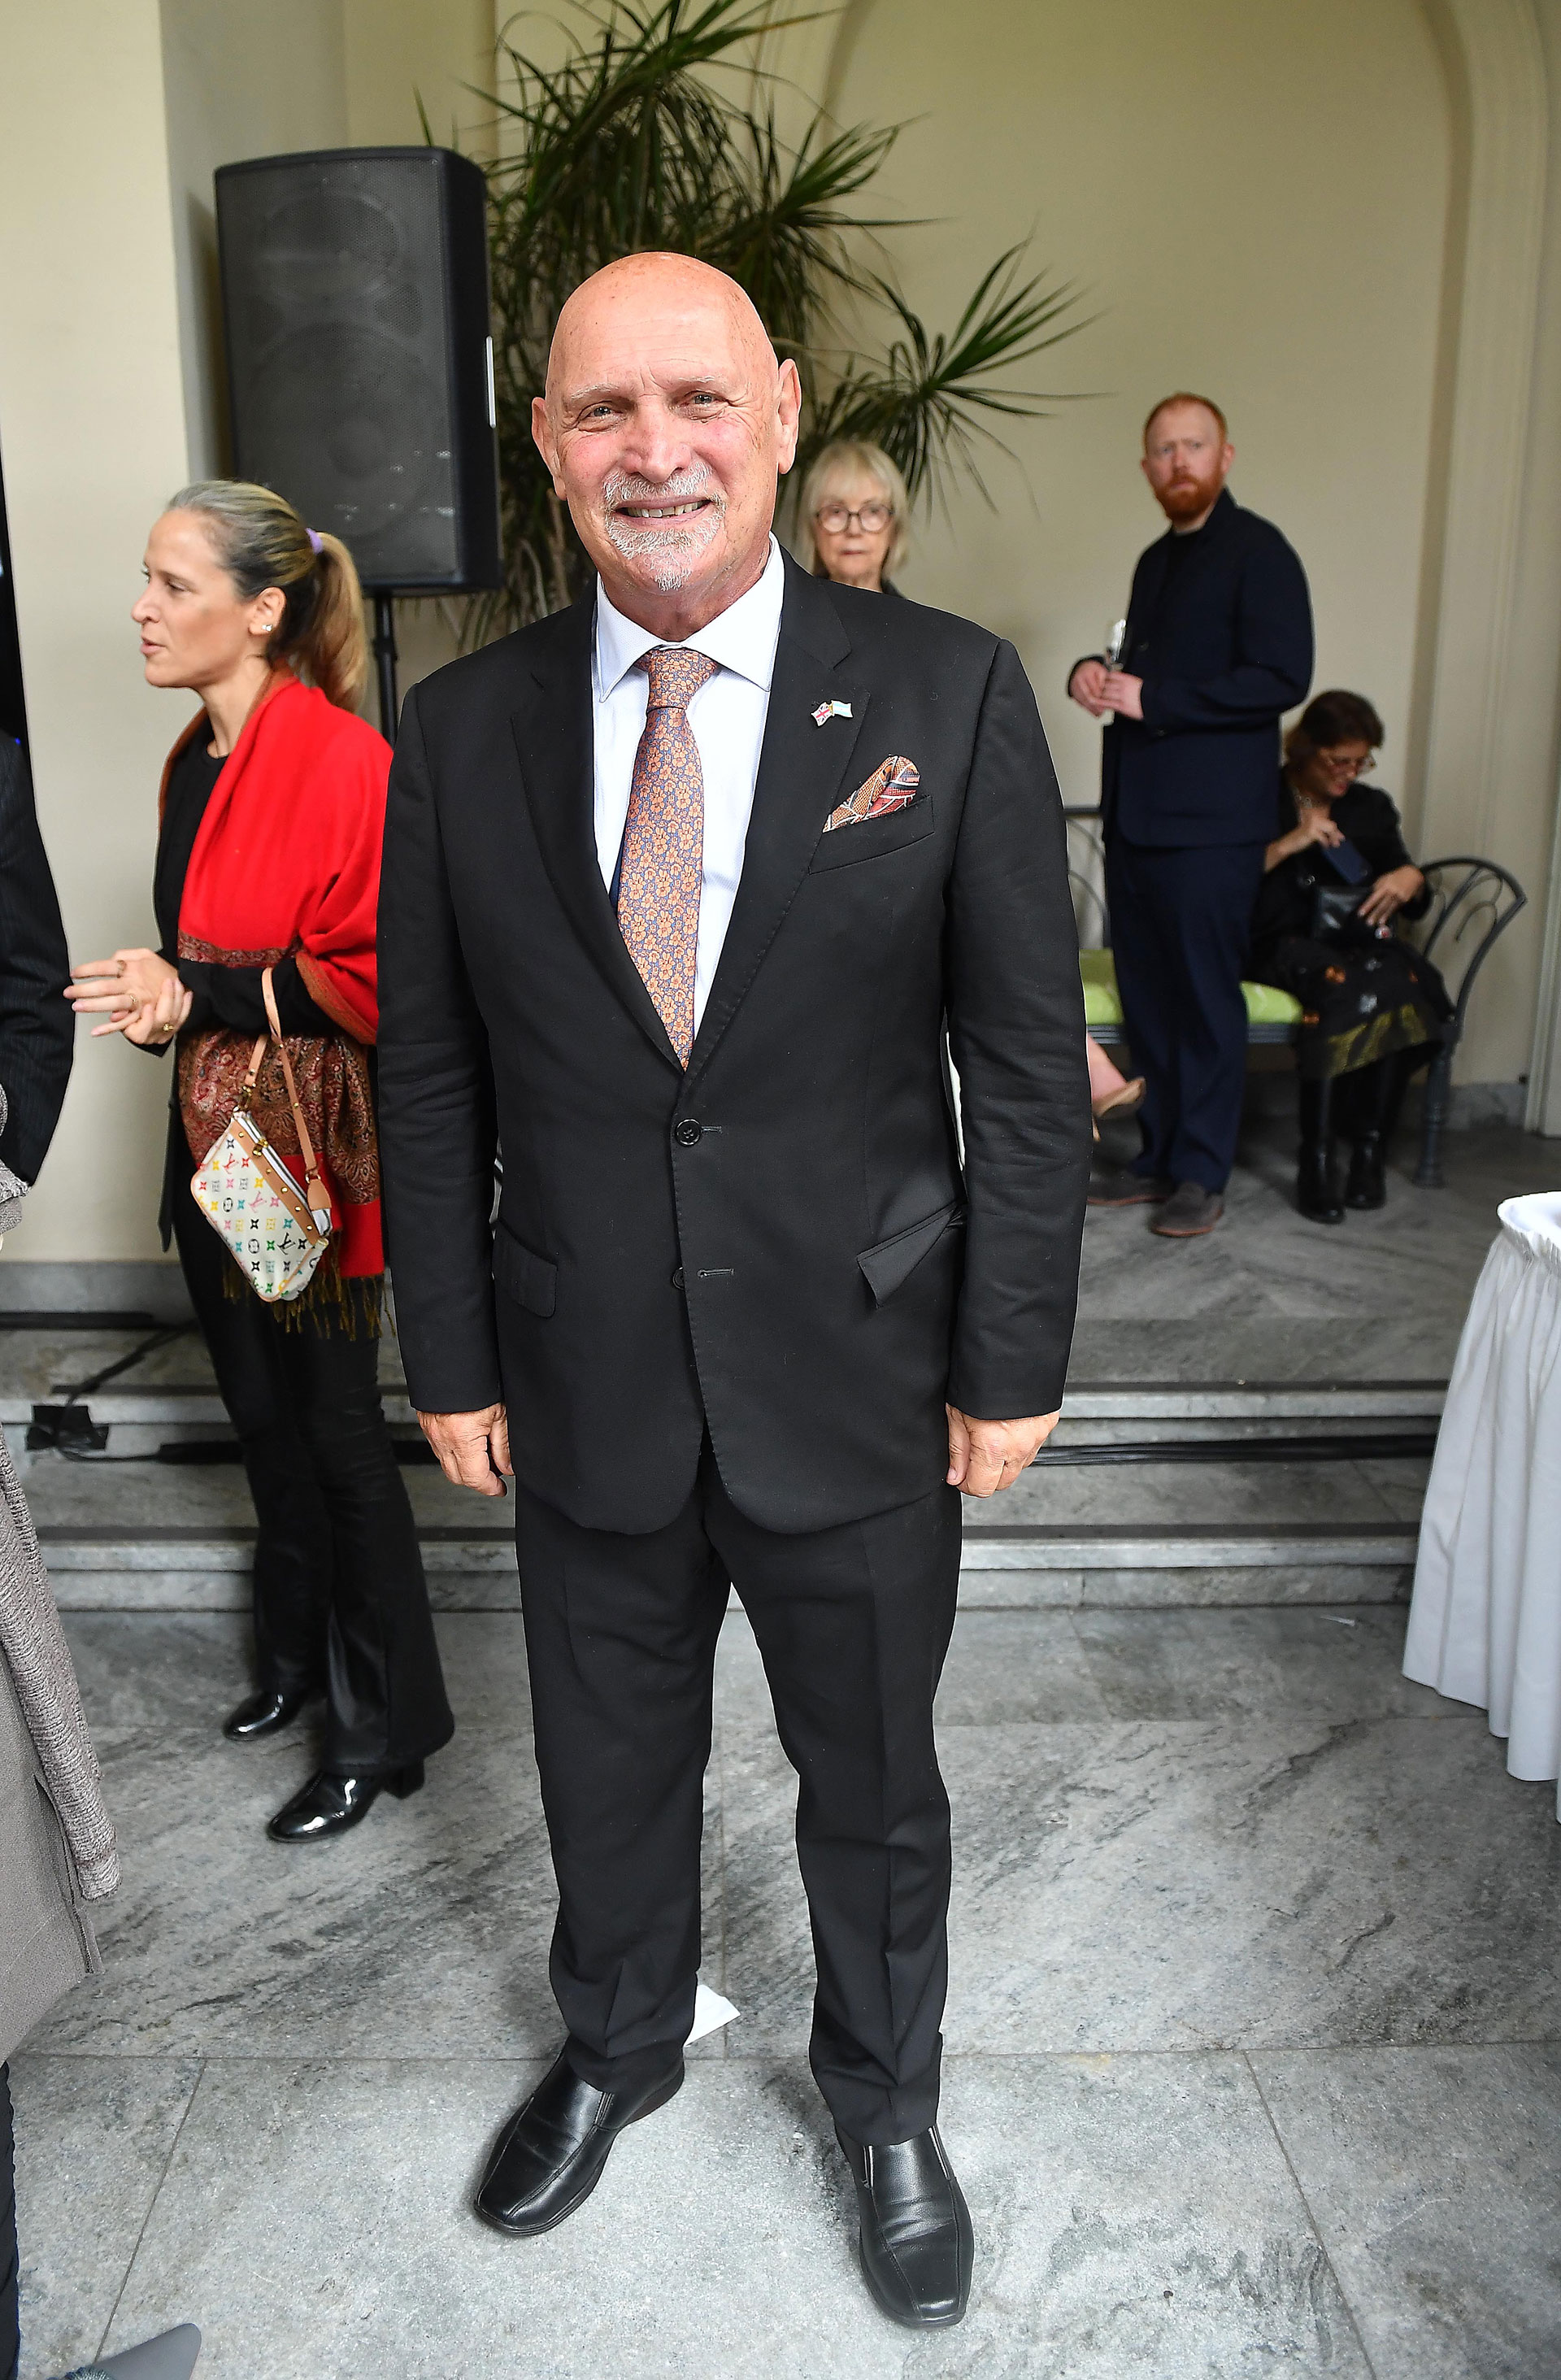 Jorge Lawson, cónsul honorario del Reino Unido en Córdoba